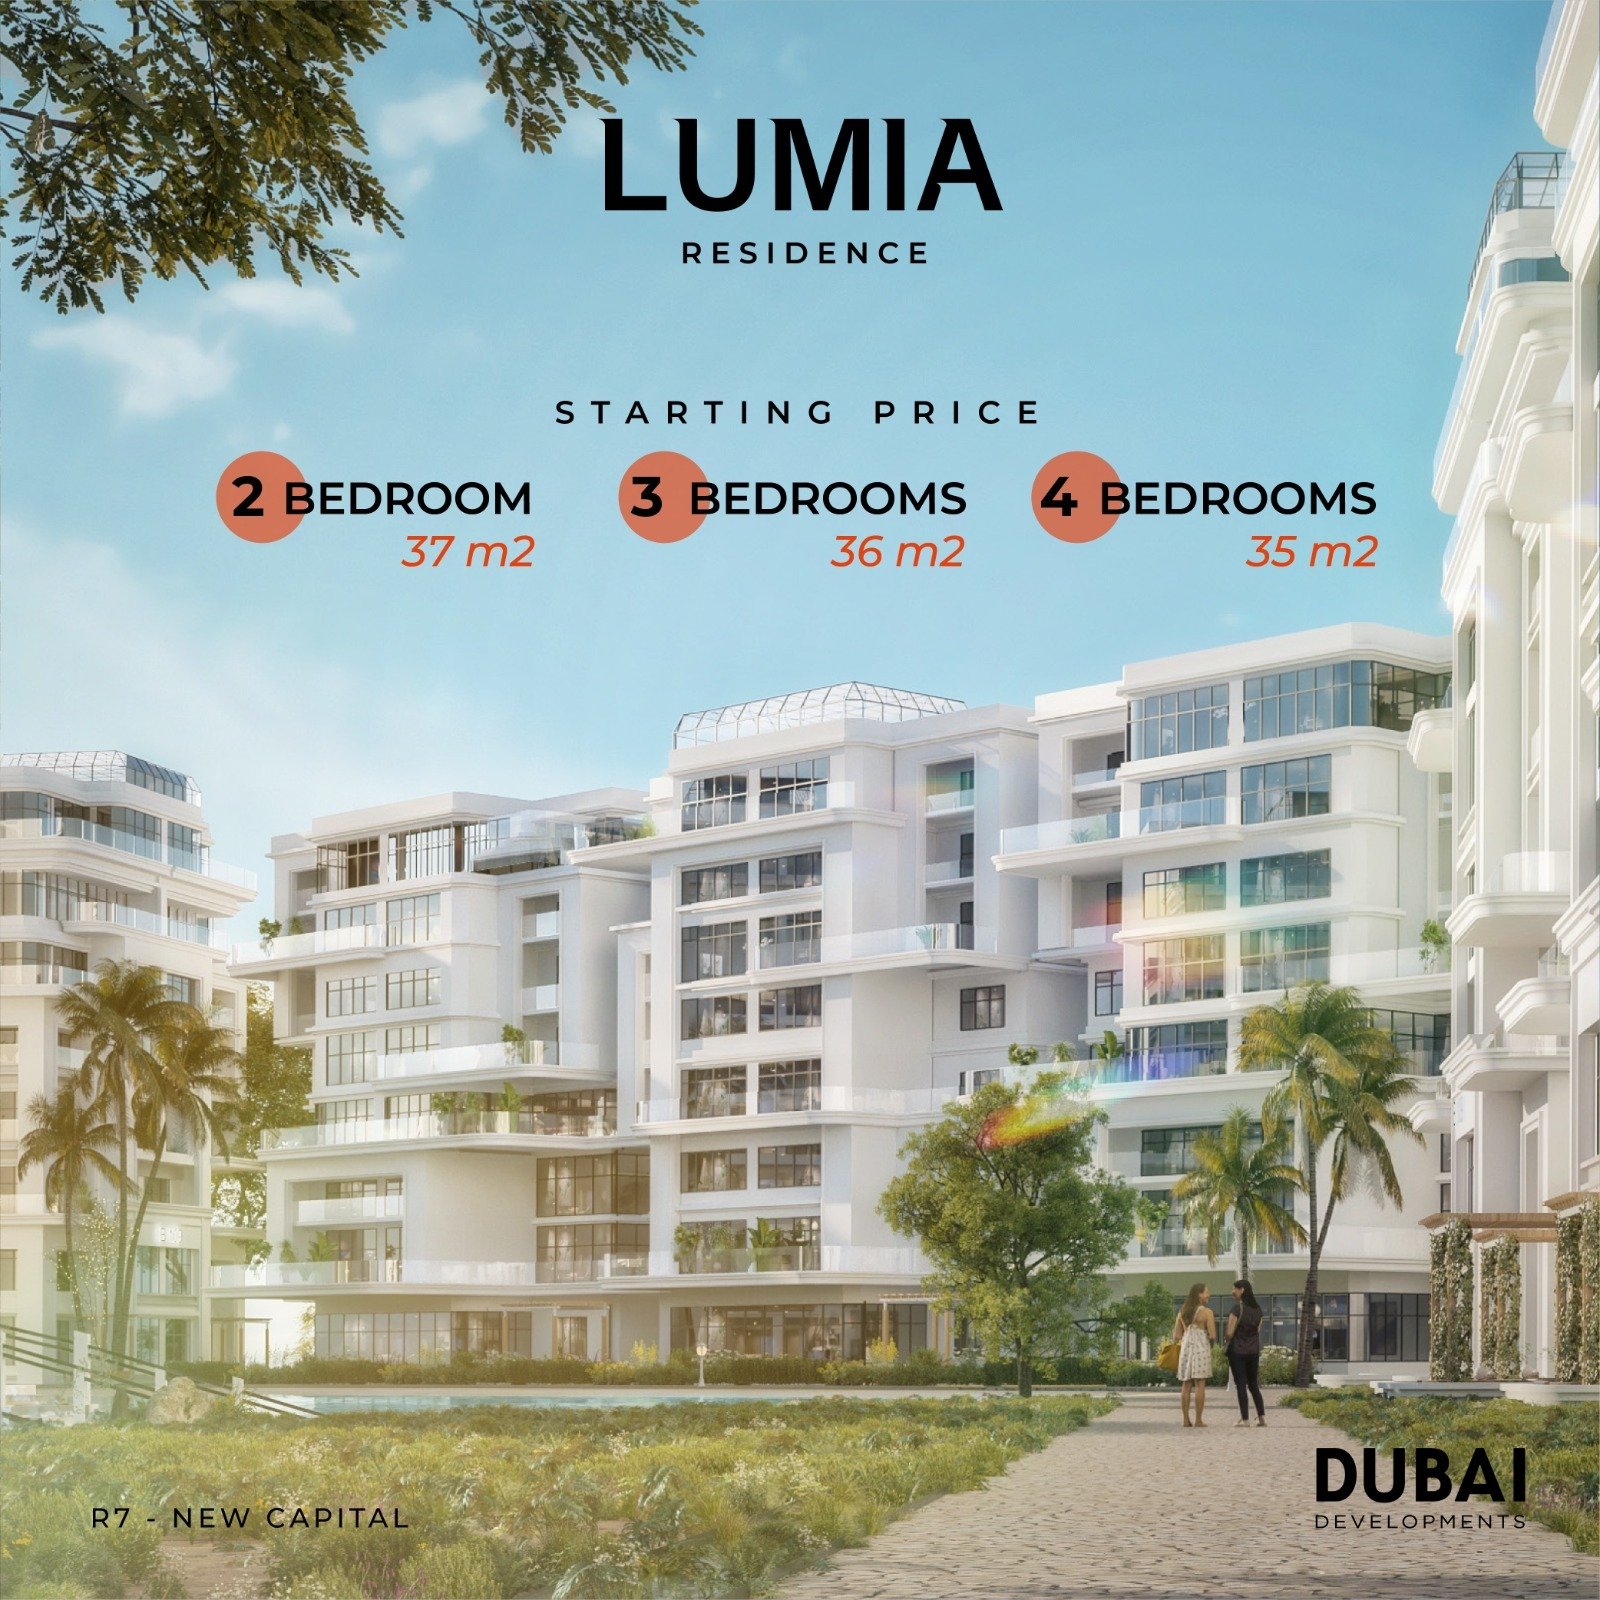 Dubai Developments Lumia Residence New Capital